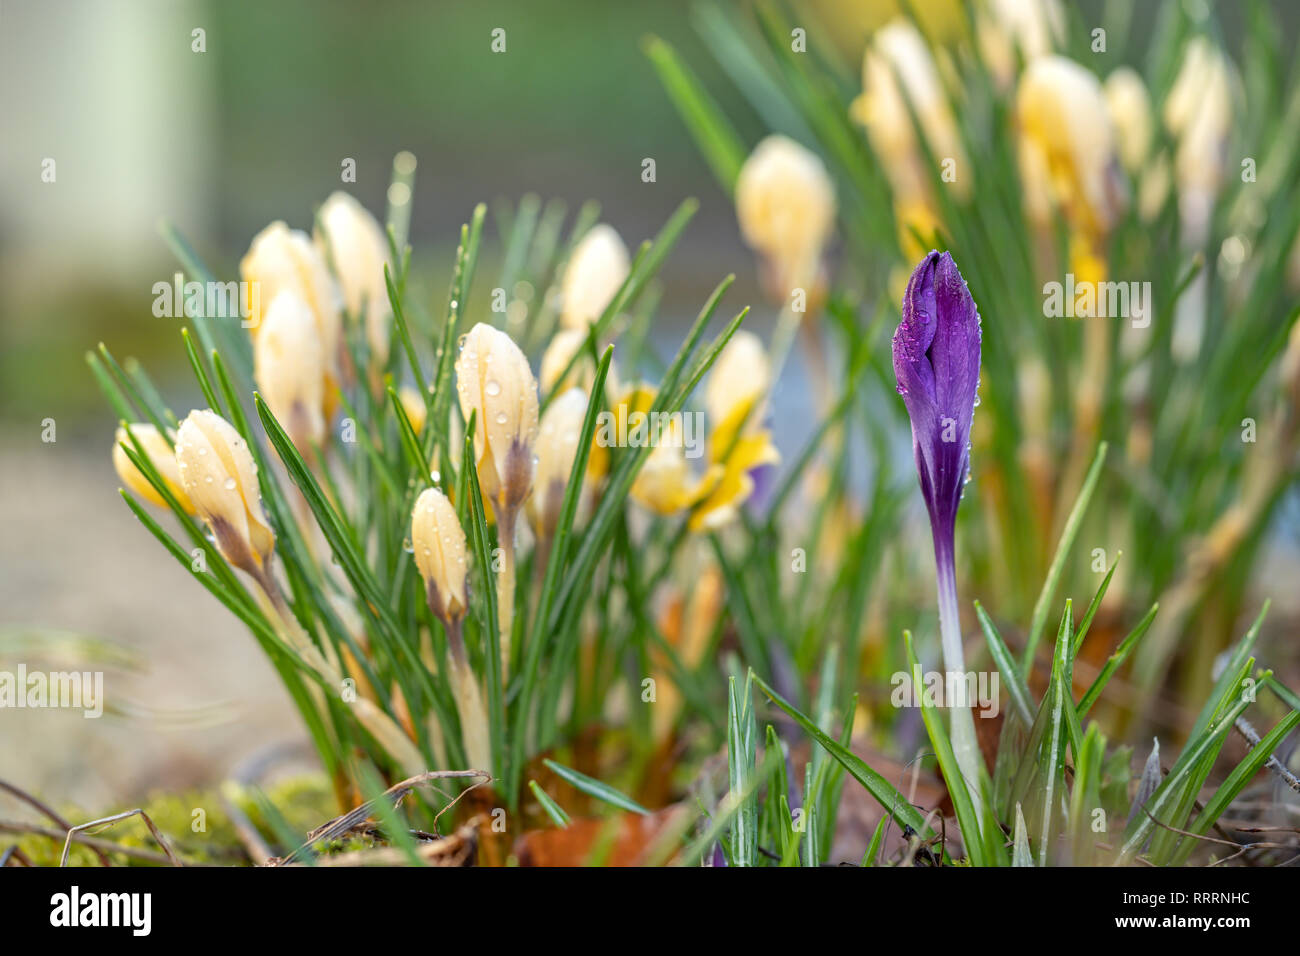 A Single purple Crocus flower in front of yellow Crocuses. Stock Photo